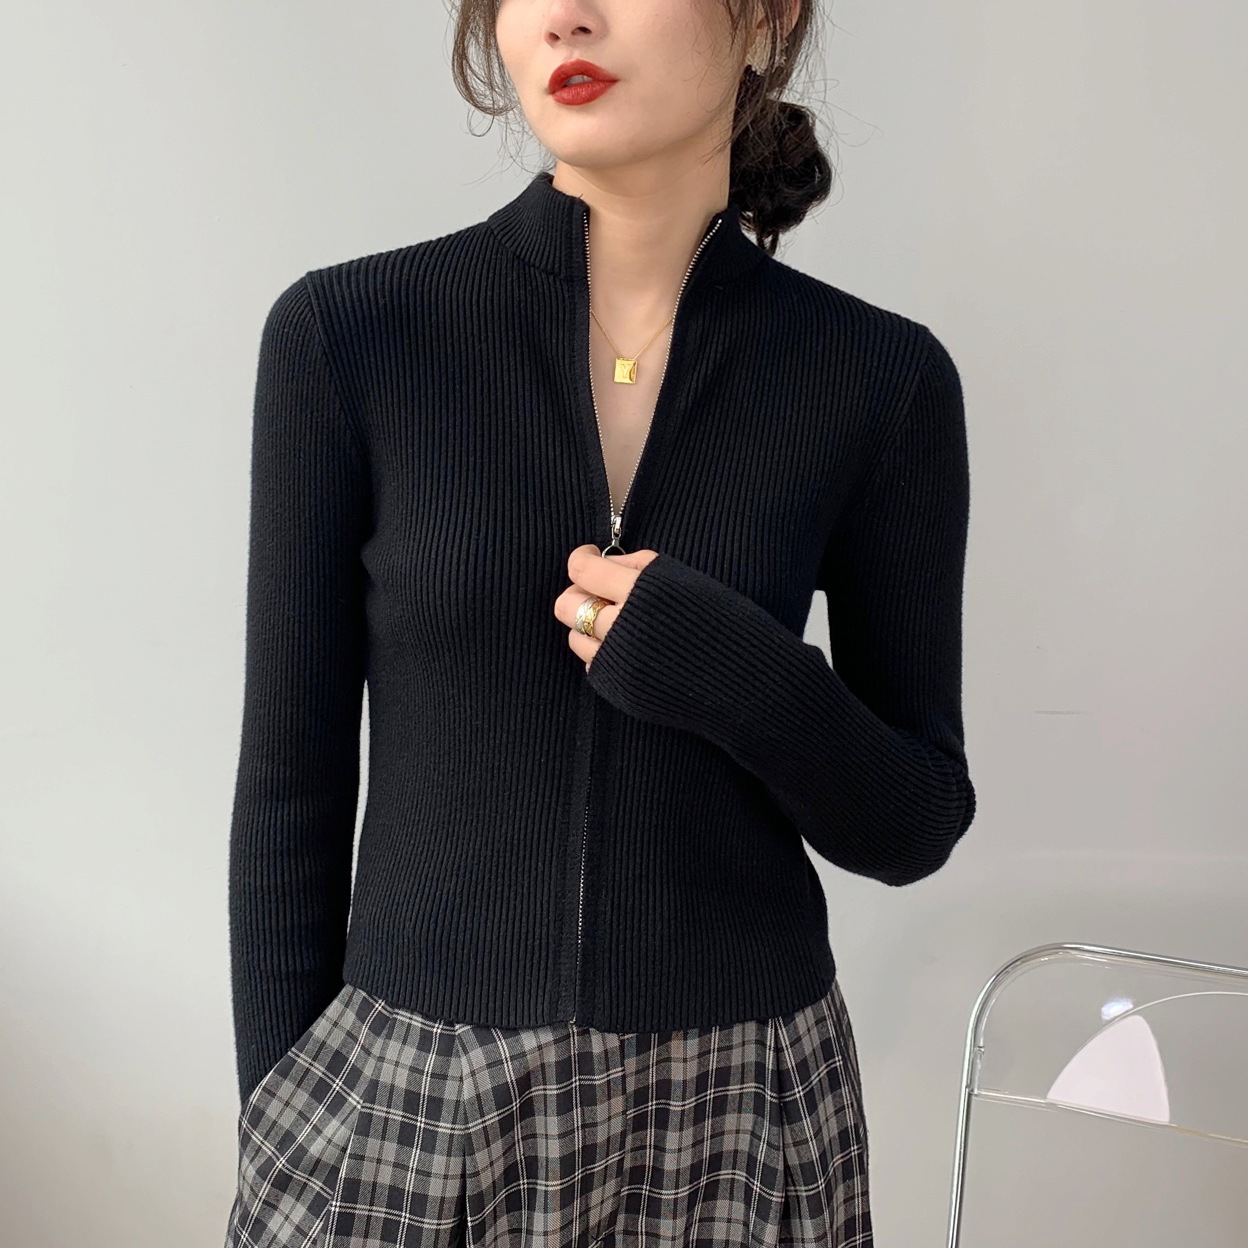 Jia Zhi High Street Girl Wear Zipper Knitted Long-Sleeved Fried Street Sweater 8t8073 Short Elegant Slim Sweater